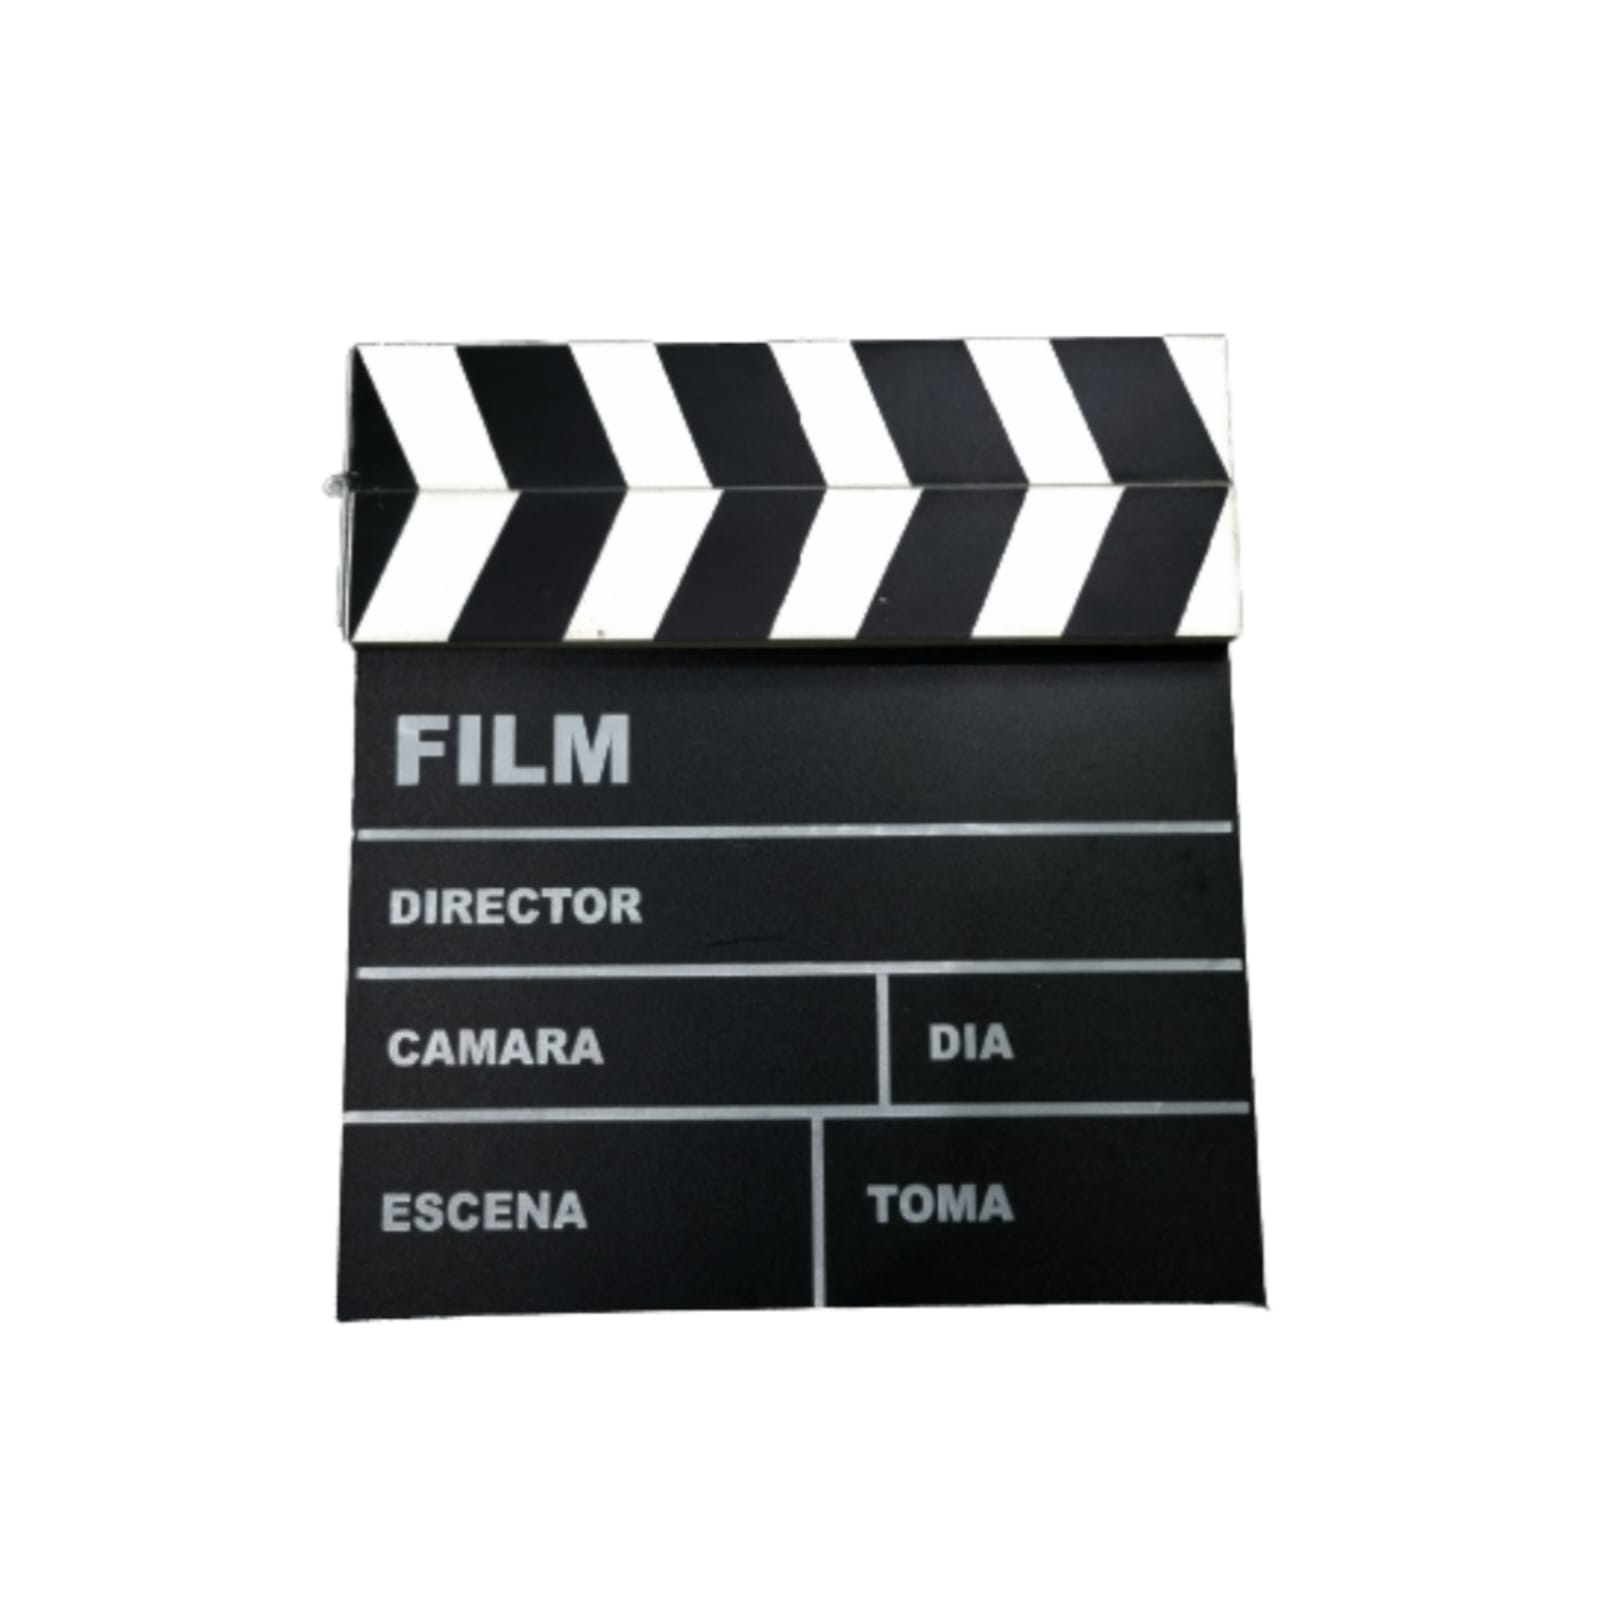 Claqueta Cine Director doble faz 20x22cms - Luis Cortez